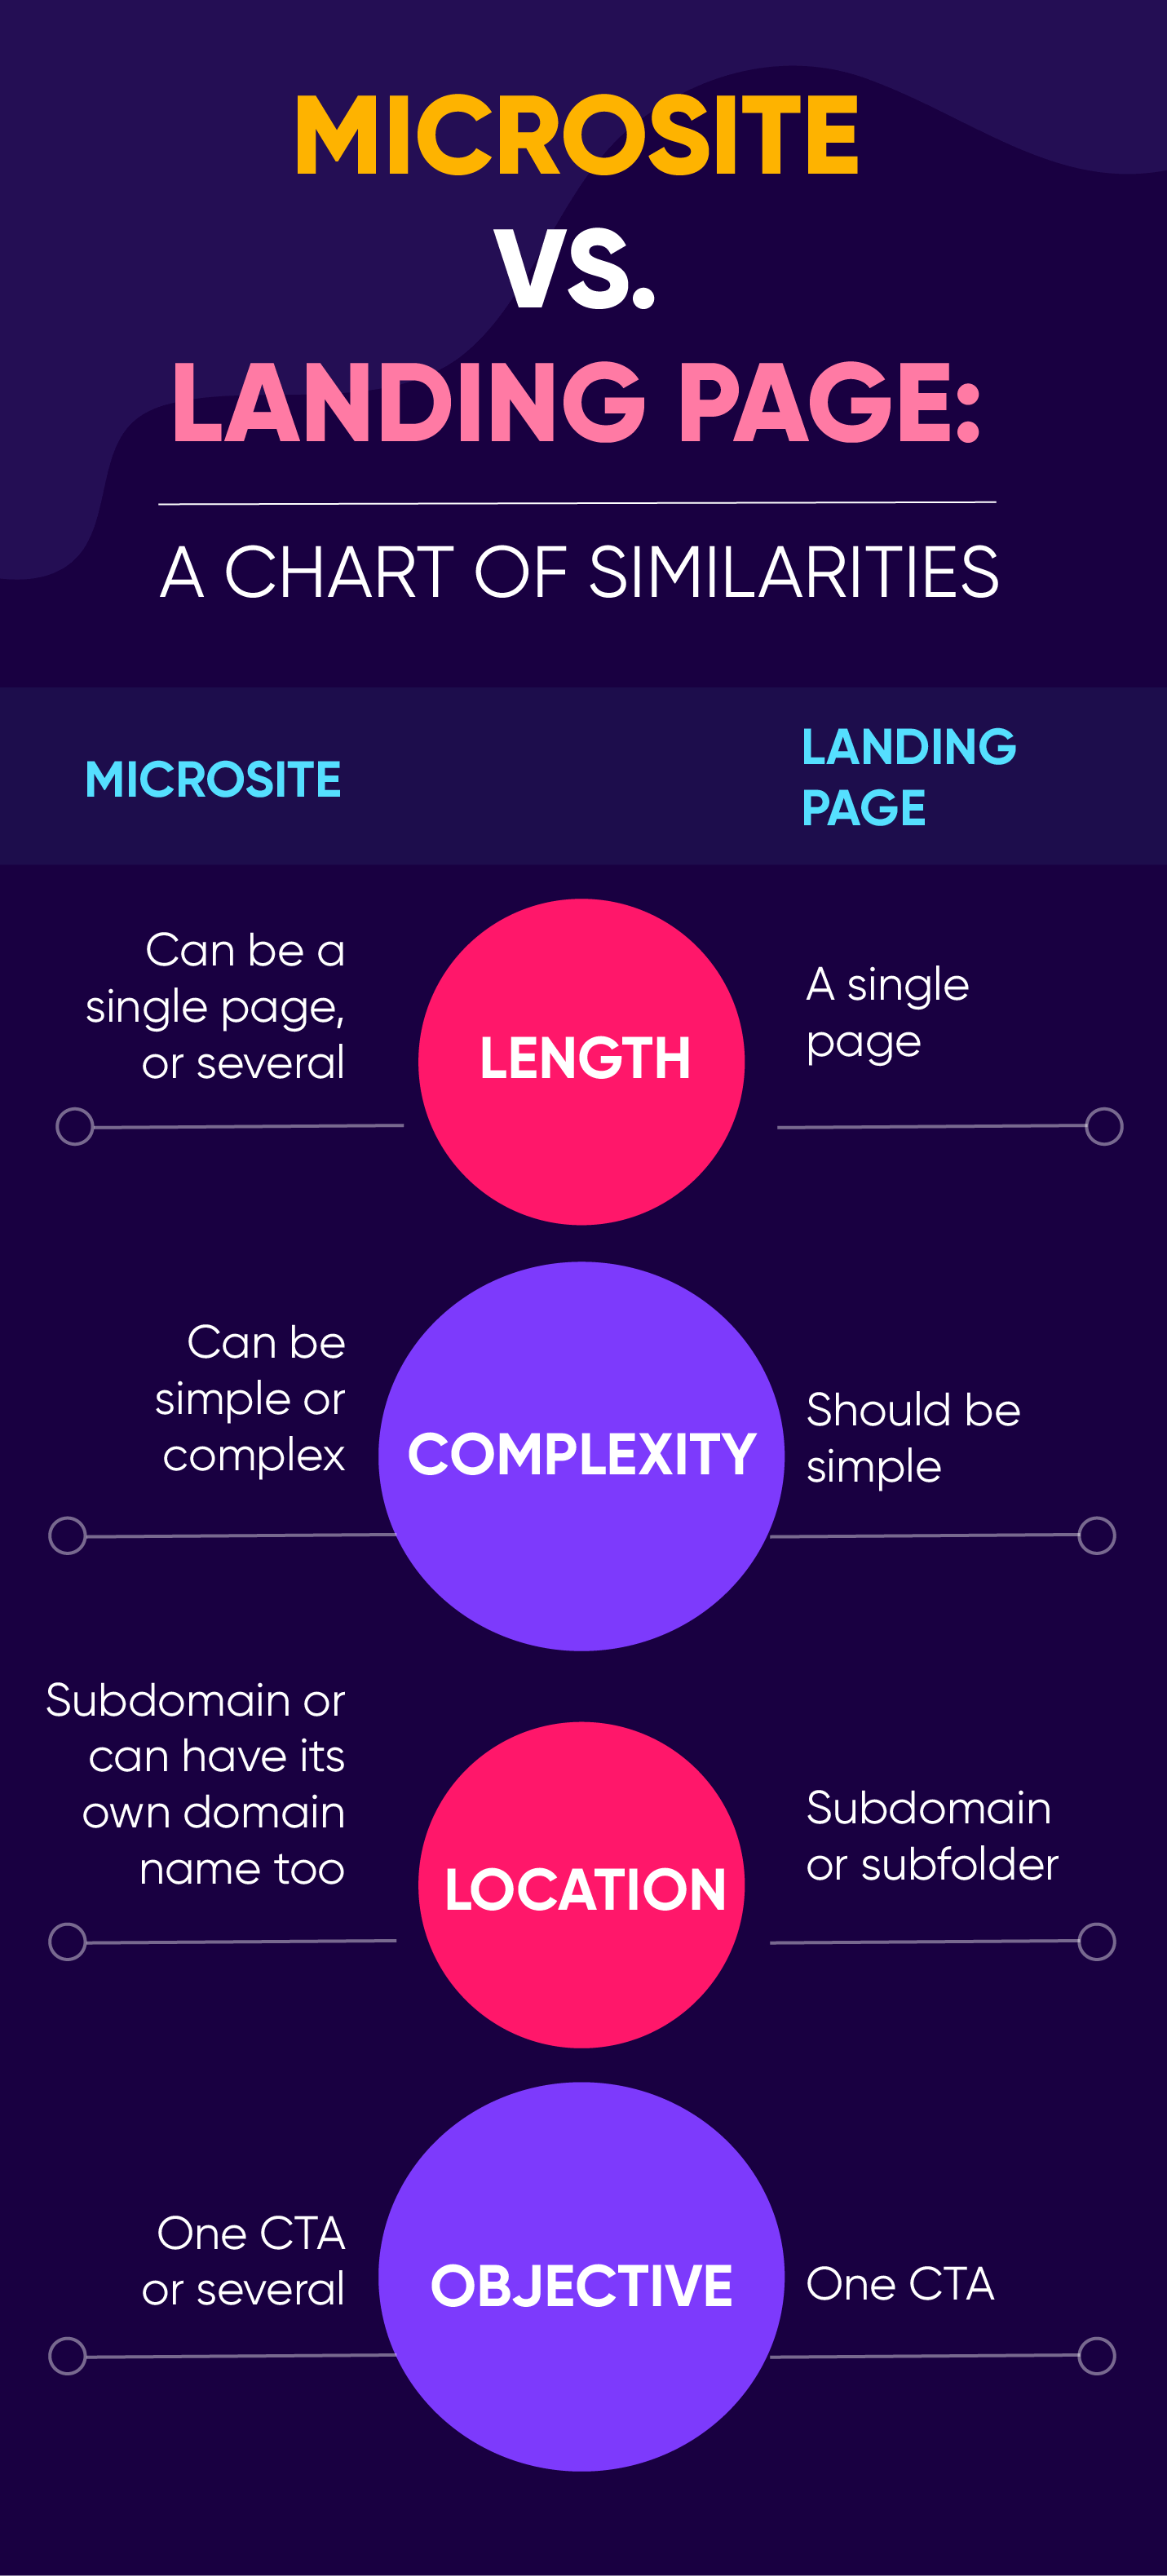 Microsite vs landing page - comparison chart